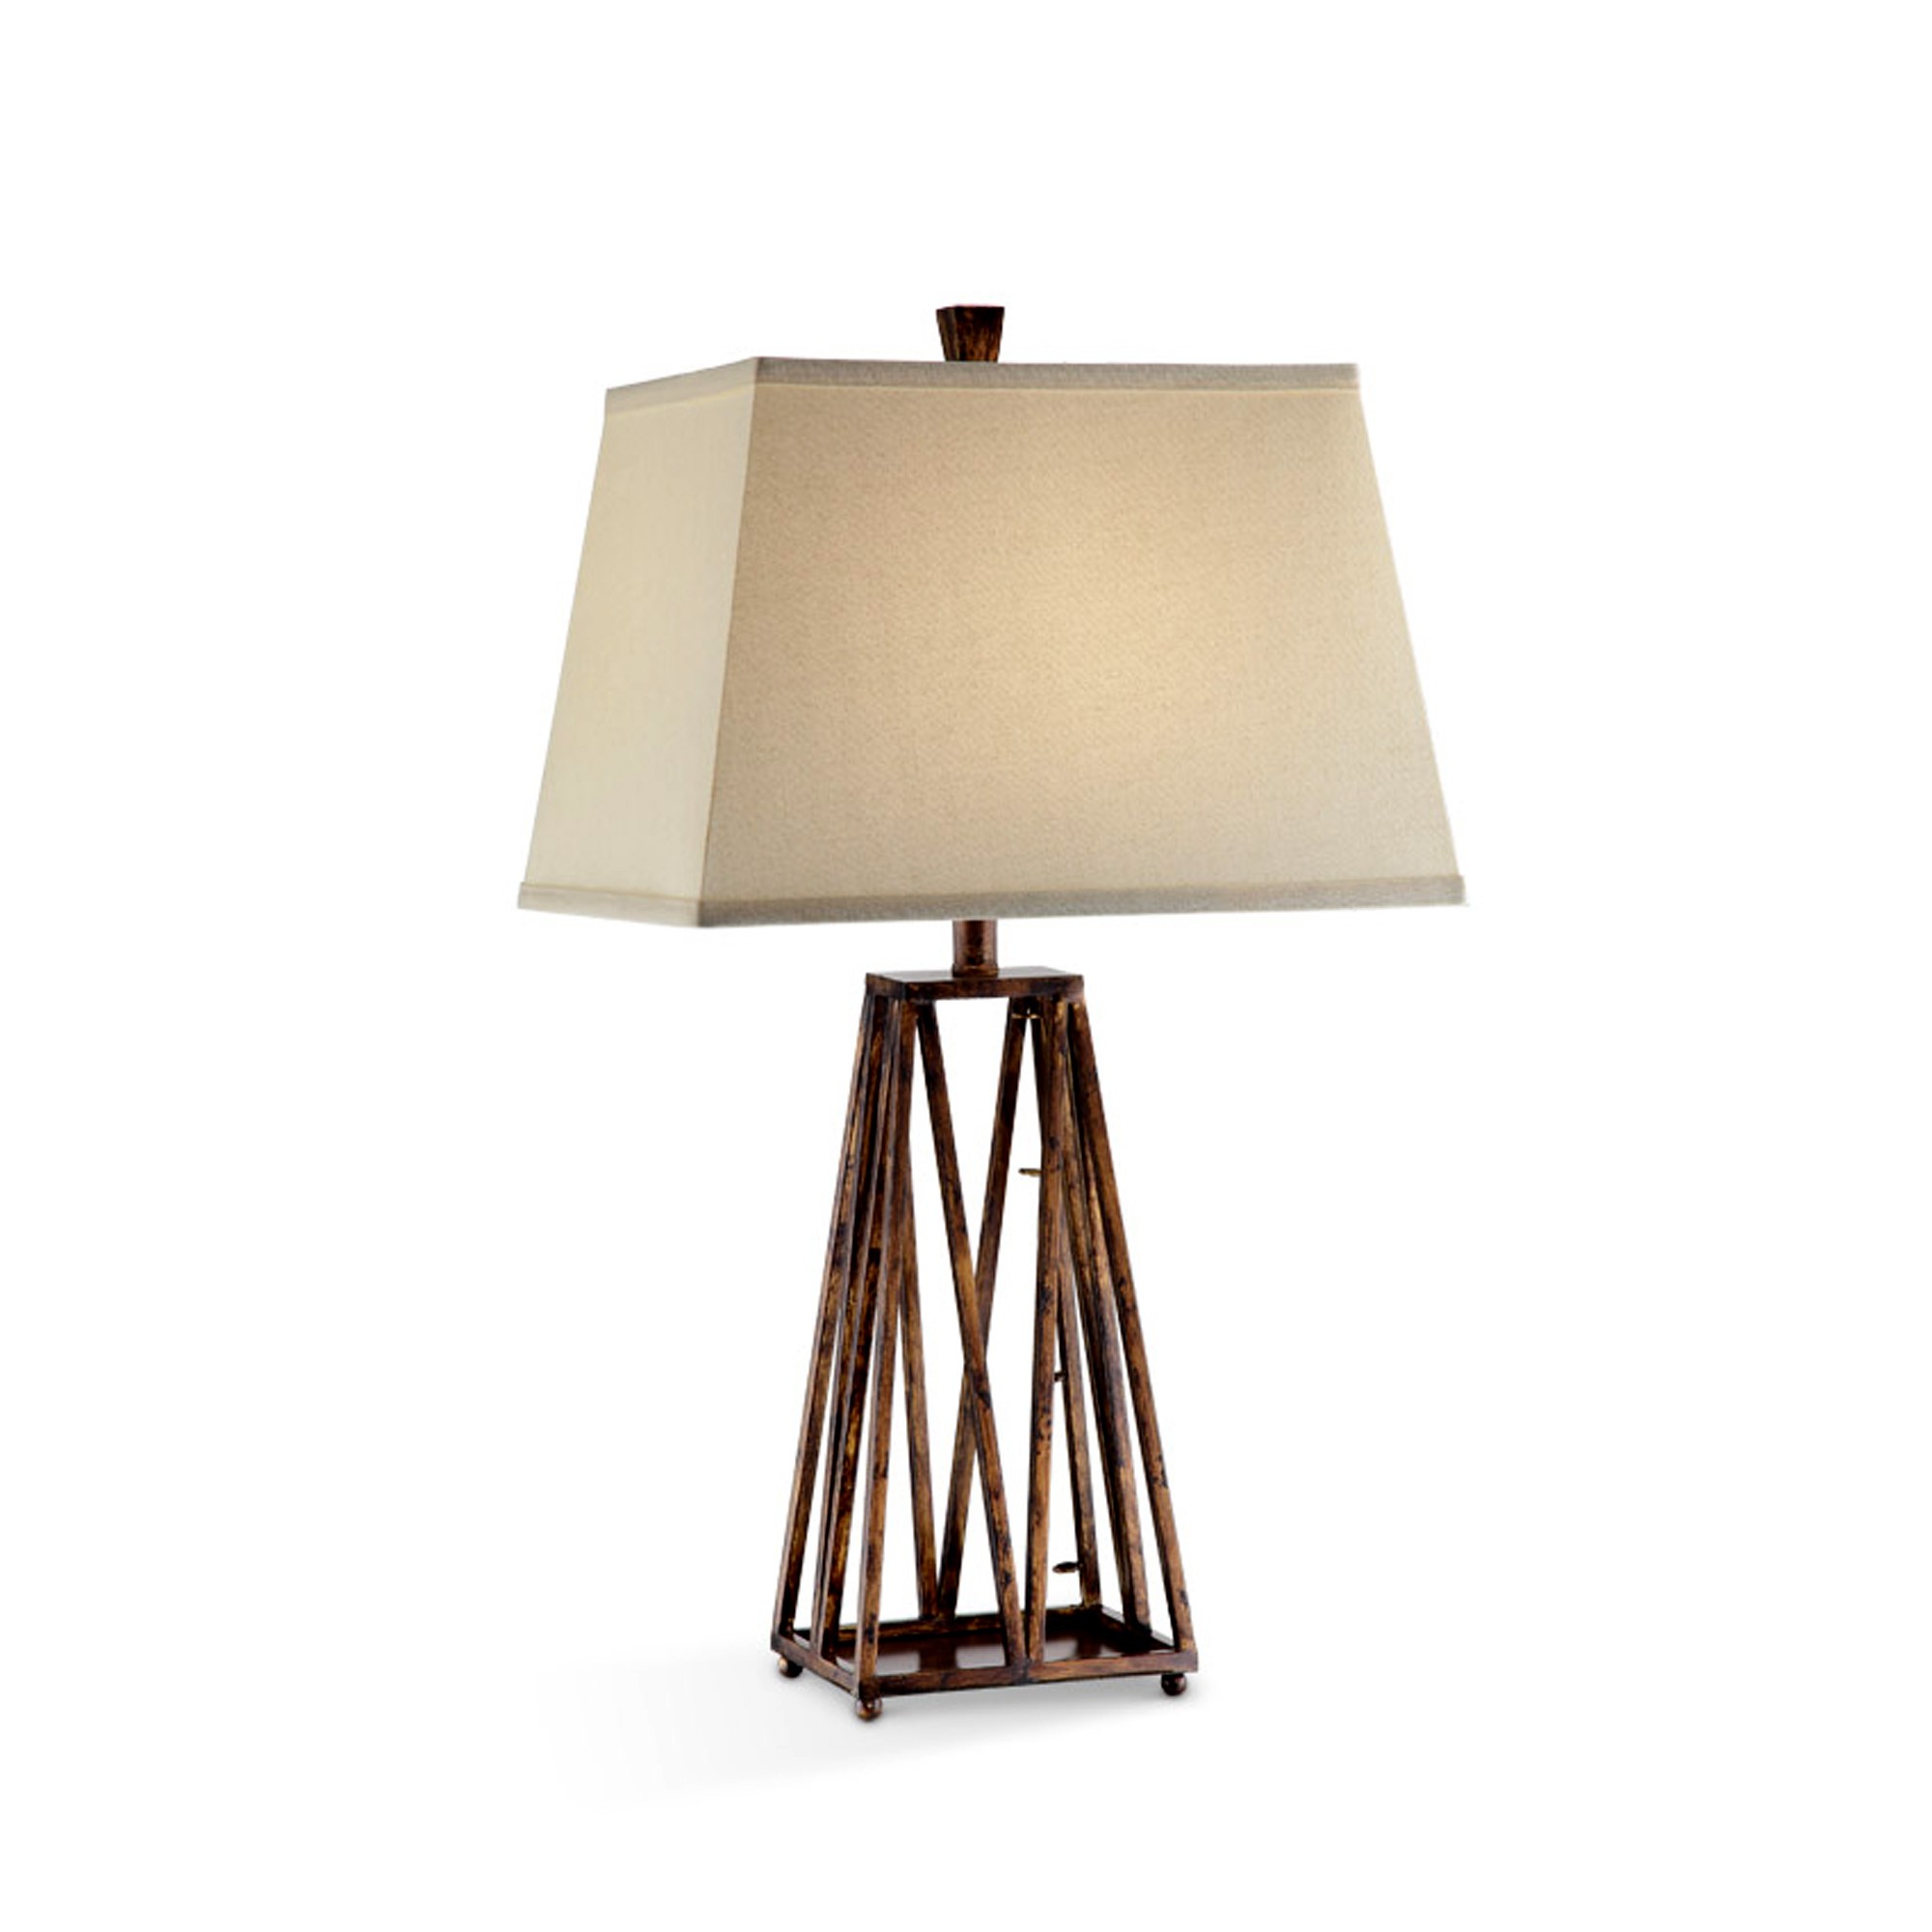 Minimalist Wooden Lamp with Cream Fabric Shade